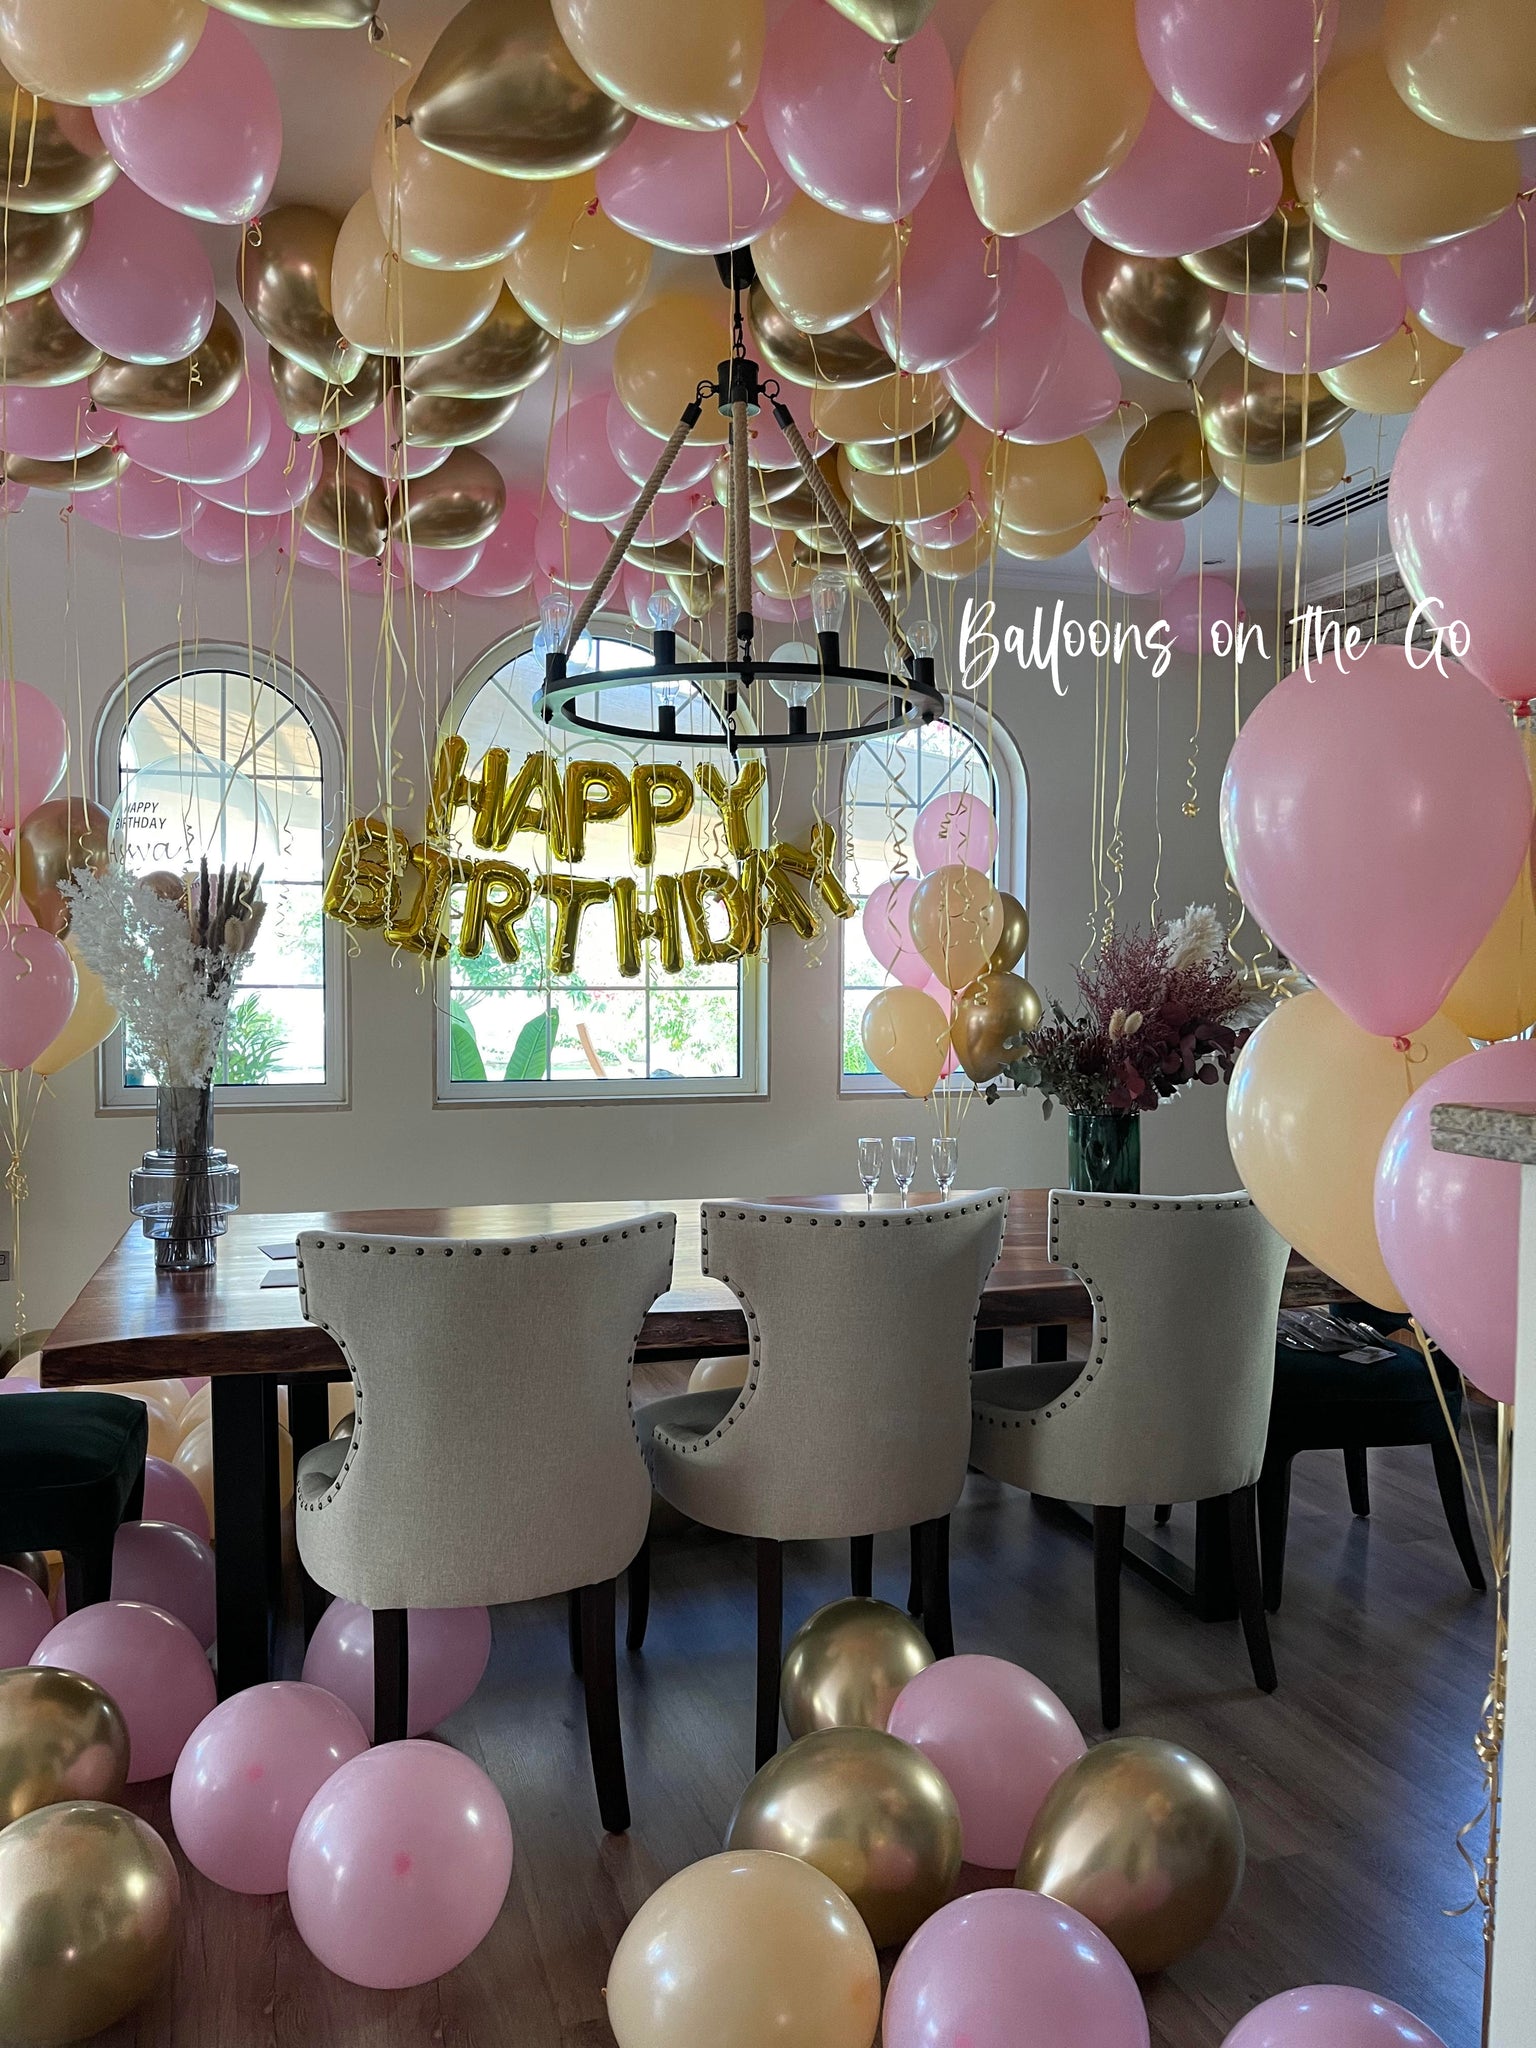 75 Ceiling balloons birthday setup !